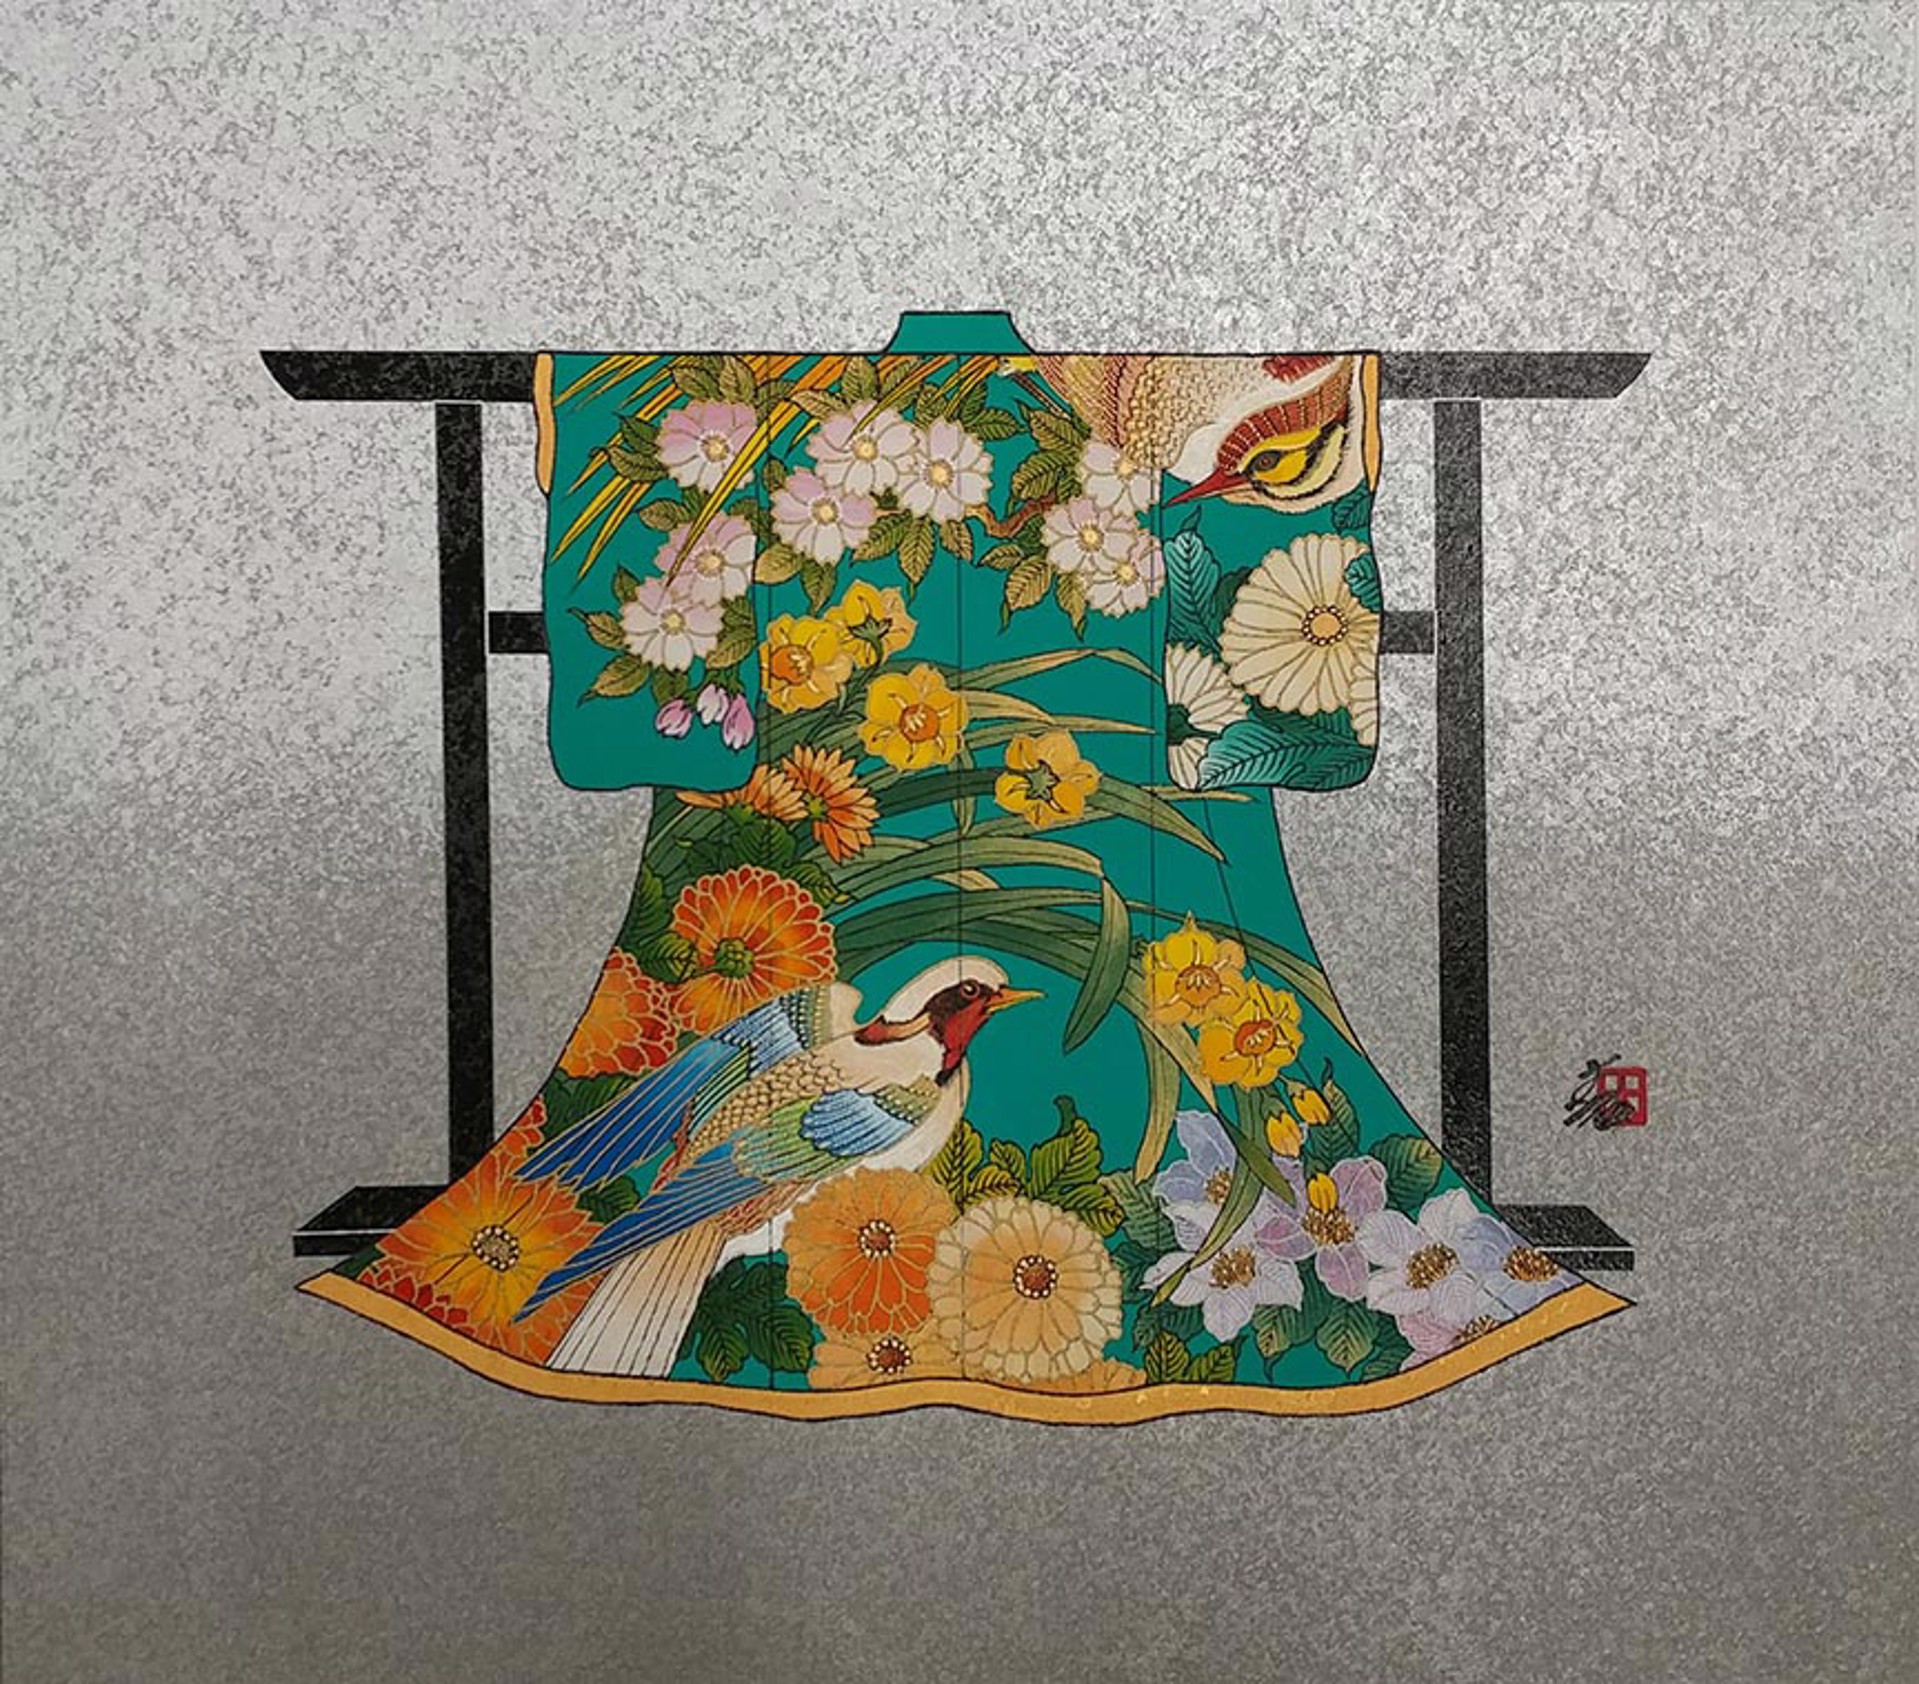 Fantasia Kimono 1 by Hisashi Otsuka